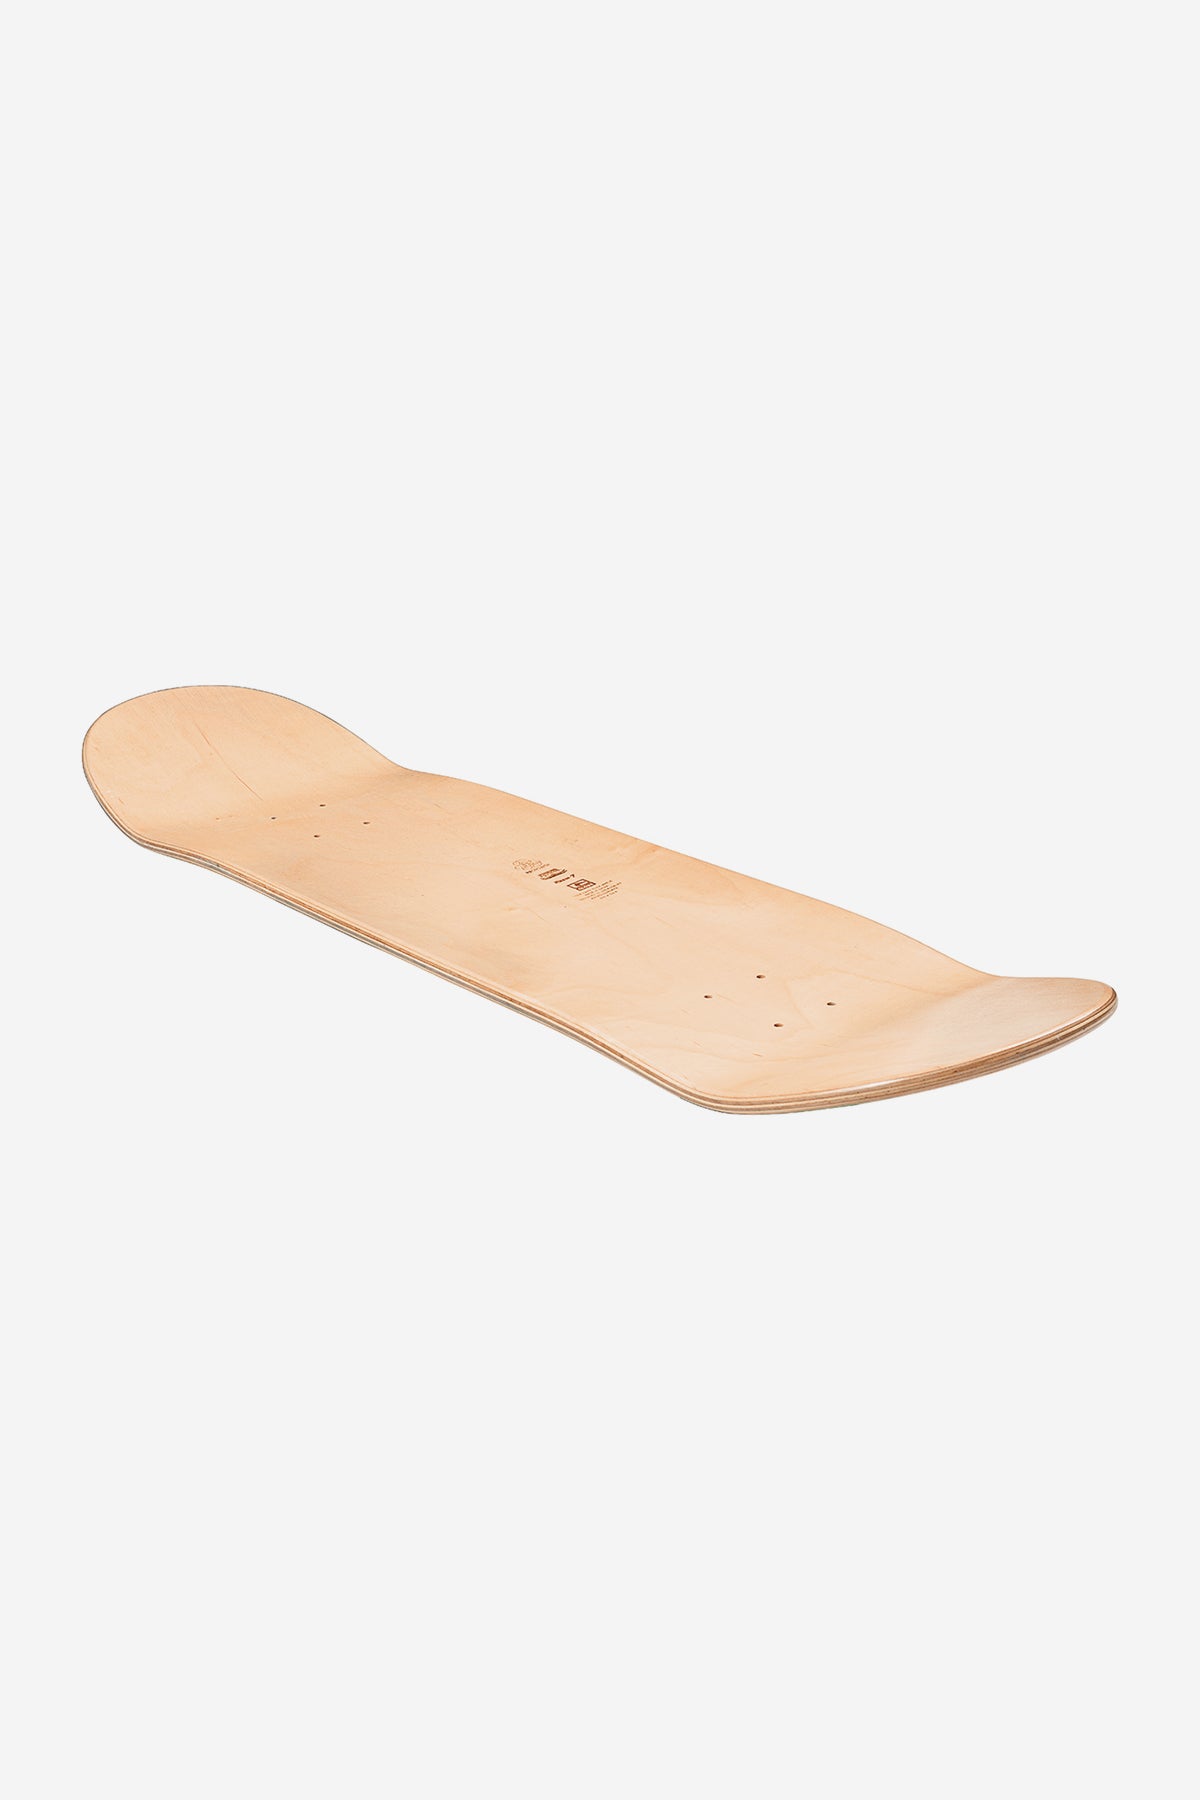 Globe - Gutstock - Red - 7.75" Skateboard Deck